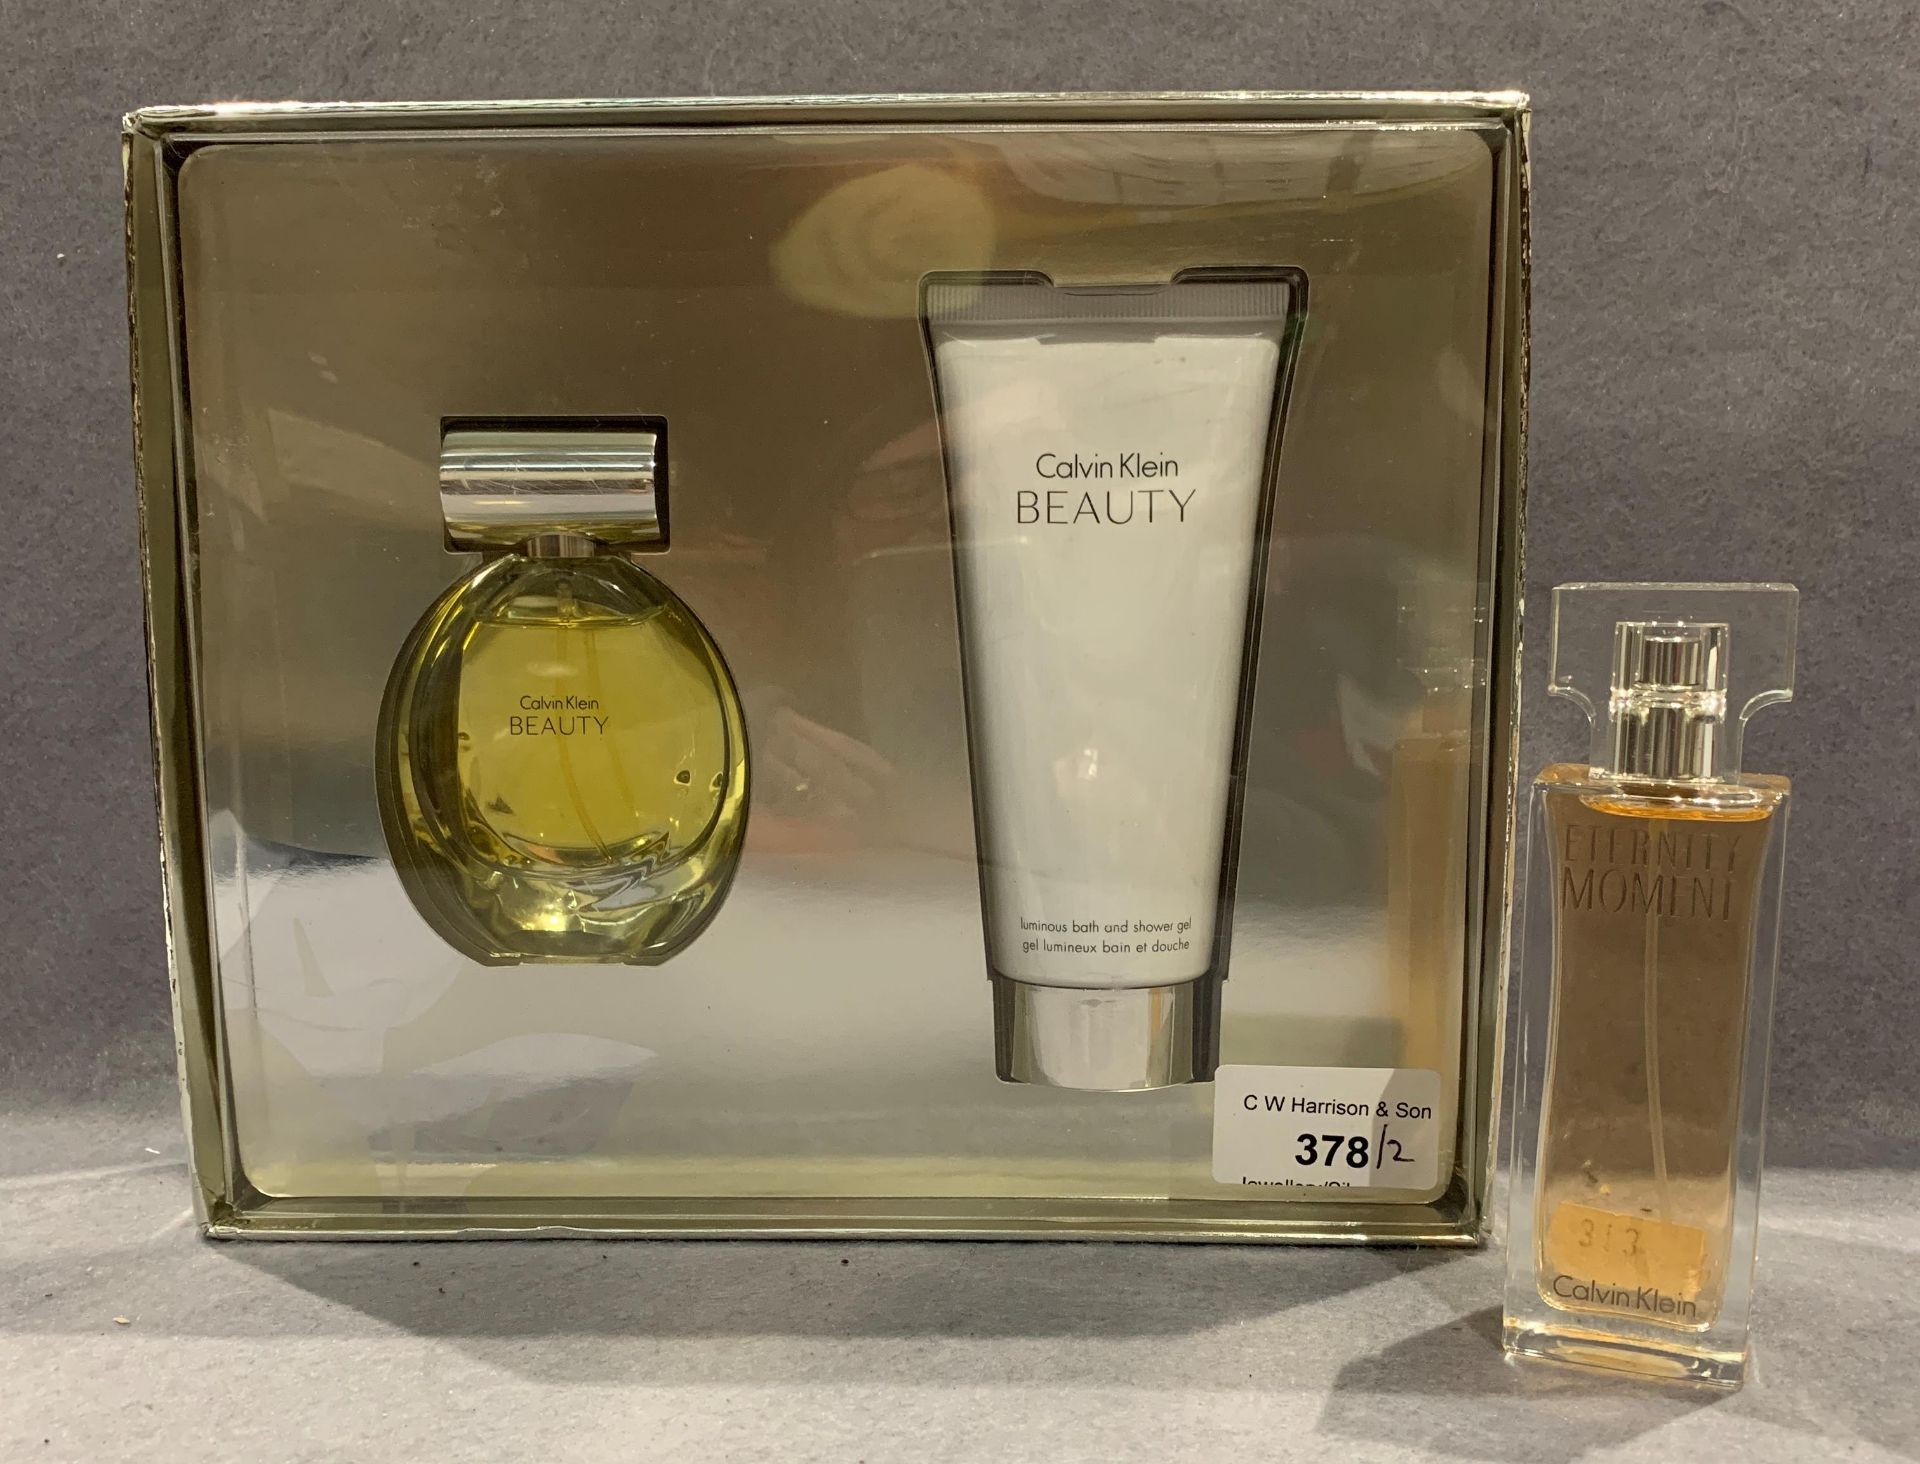 A Calvin Klein Beauty gift set and a bottle of Calvin Klein Eternity Moment 30ml eau de parfum